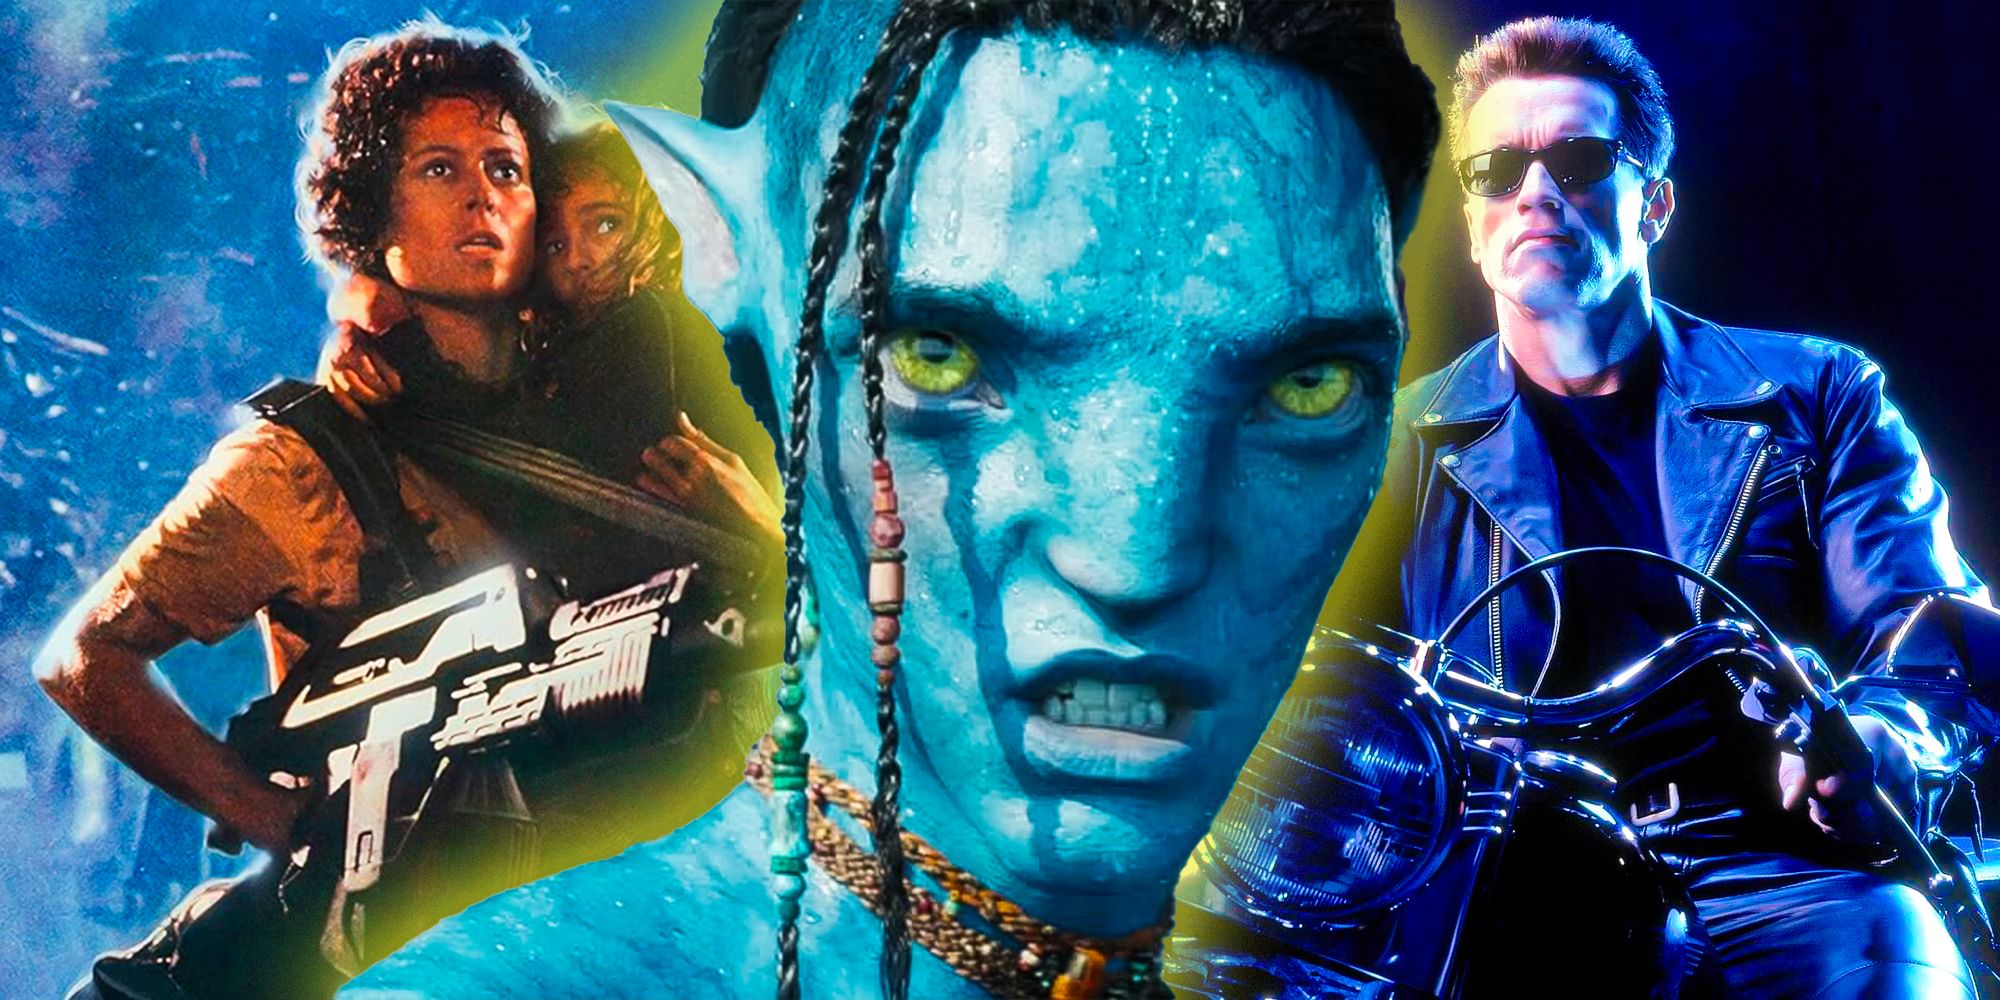 Ellen Ripley and Newt in Aliens, Lo'ak in Avatar 2, and the Terminator in Terminator 2